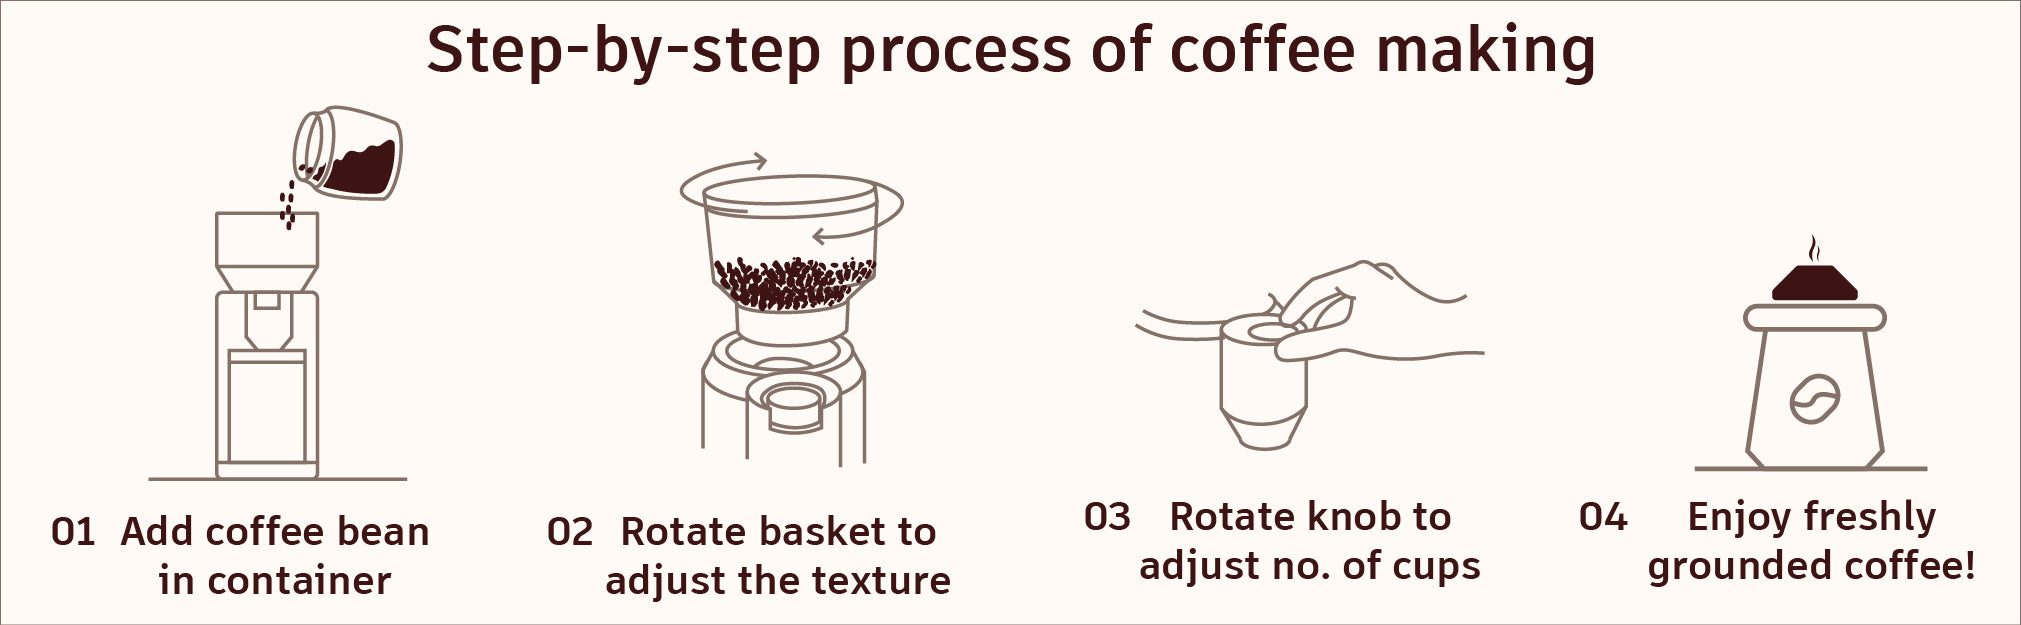 Regalia Electric Coffee Grinder | Burr Grinder | 31 Grinding Settings | Set  Variable Coffee Texture, Fine, Medium, Coarse | Grind Beans for Espresso